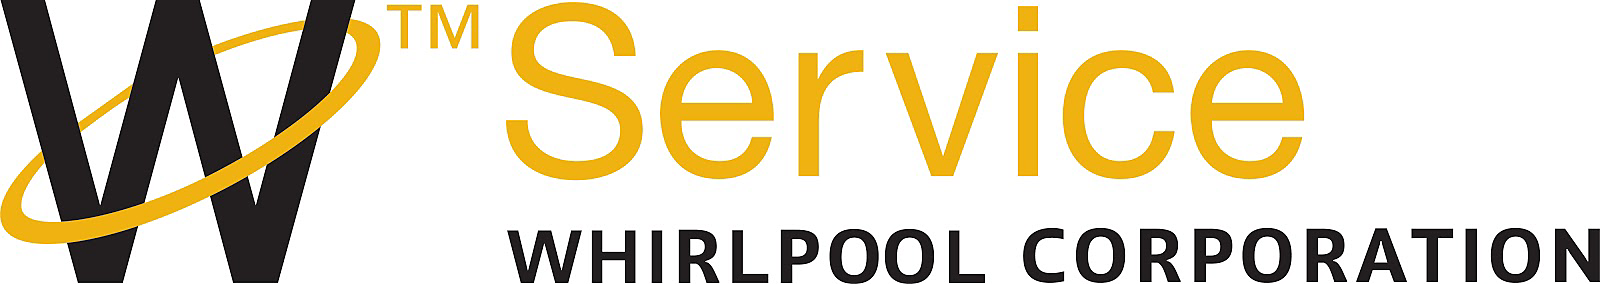 The Whirlpool™ Service logo.